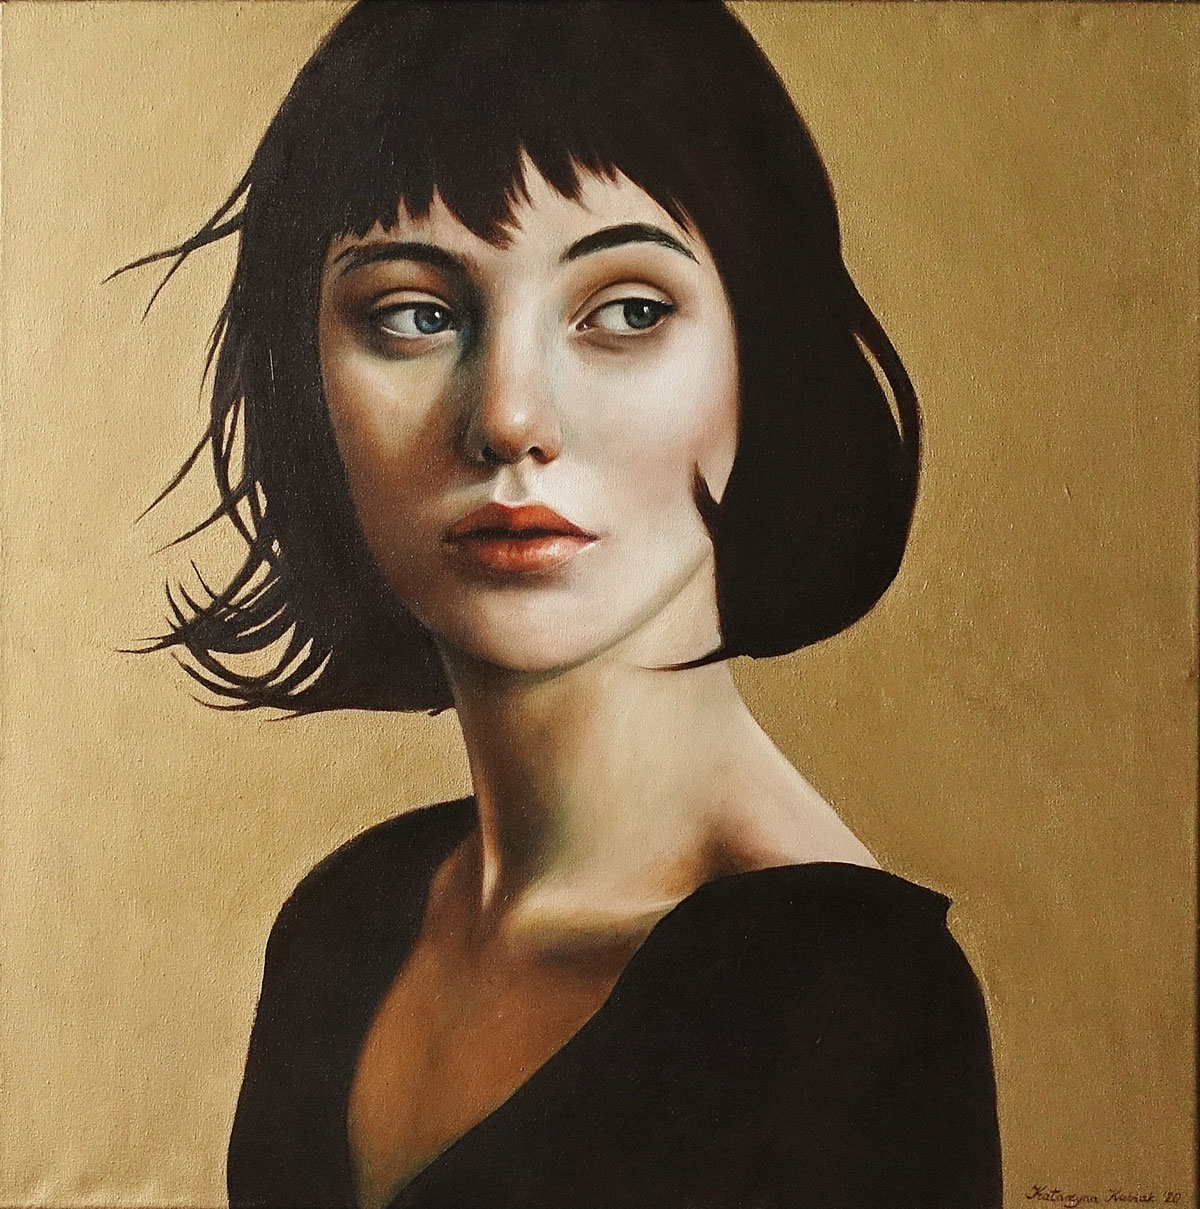 Katarzyna Kubiak - The girl from the golden wall